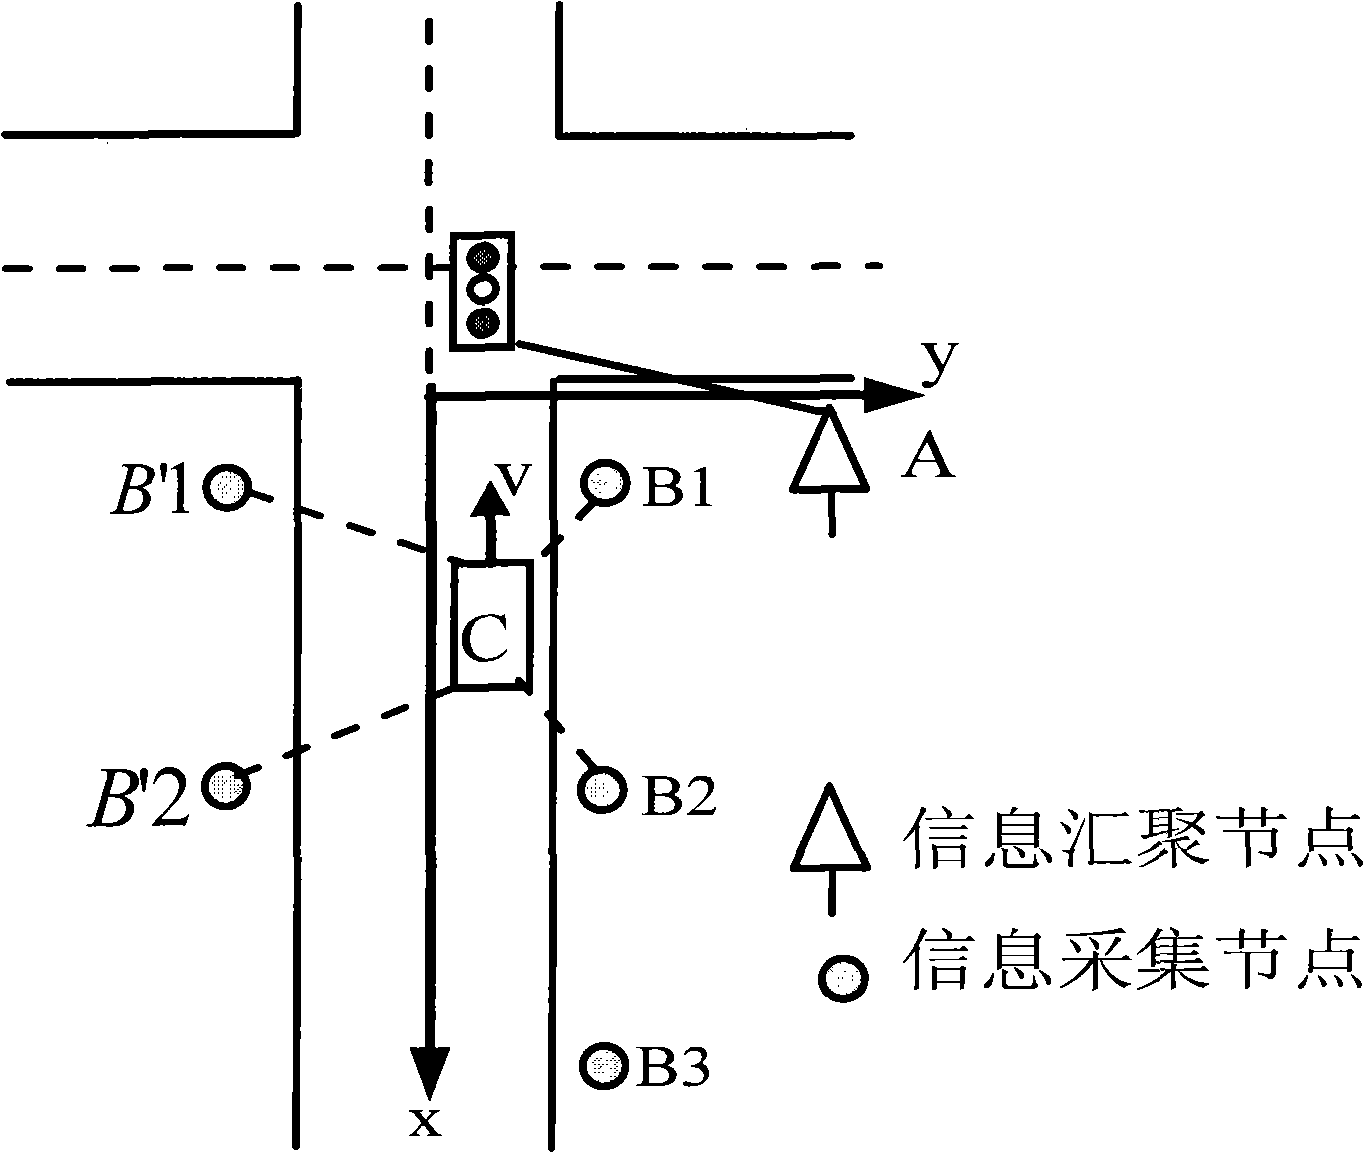 Control method for single-point self-organizing traffic signal based on wireless sensor network